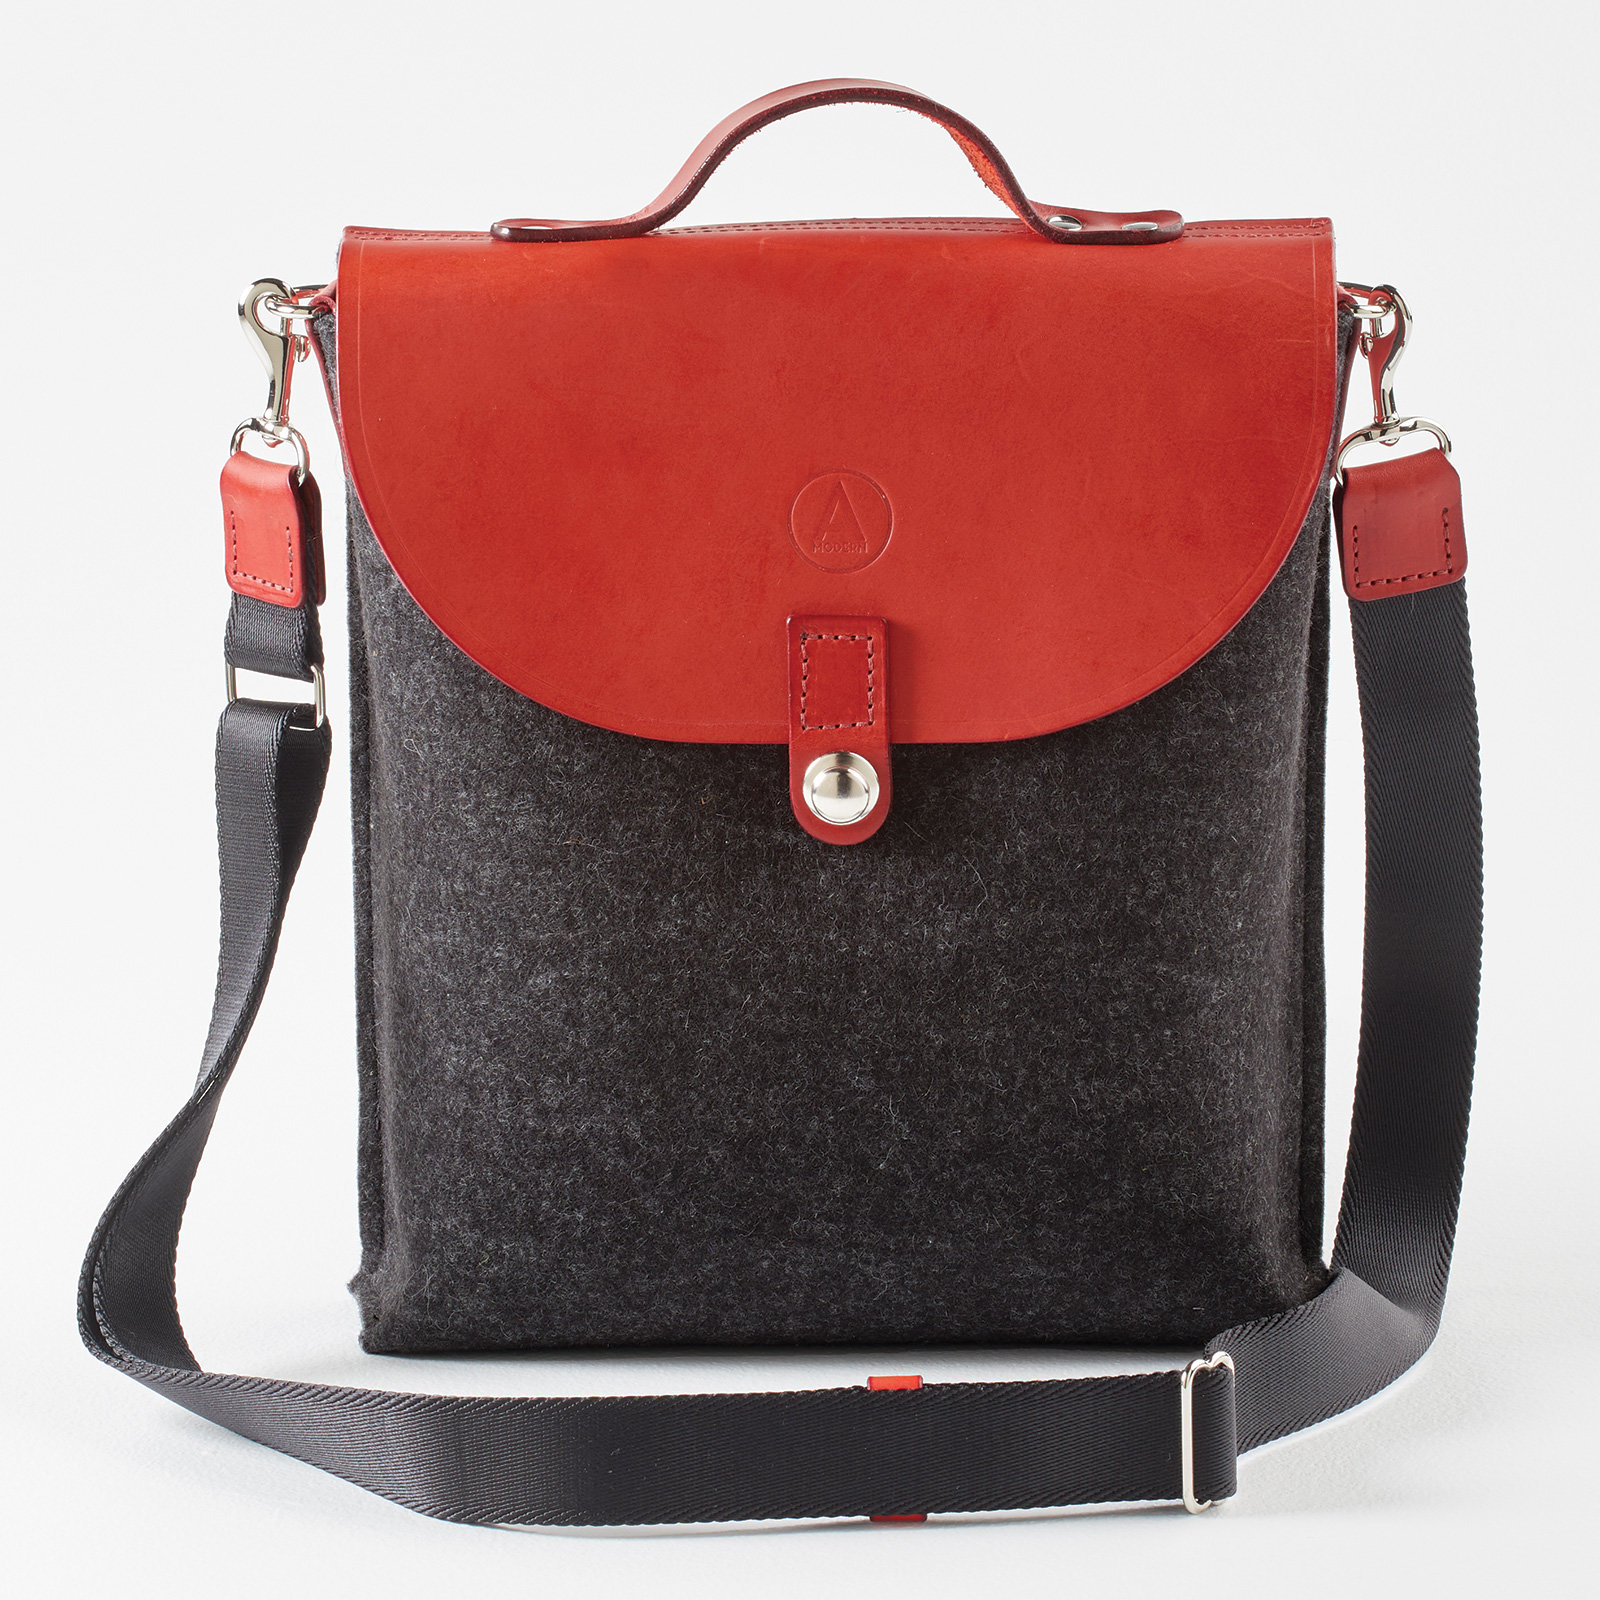 DIEGO Bag Charcoal Handbag With Crossbody Strap